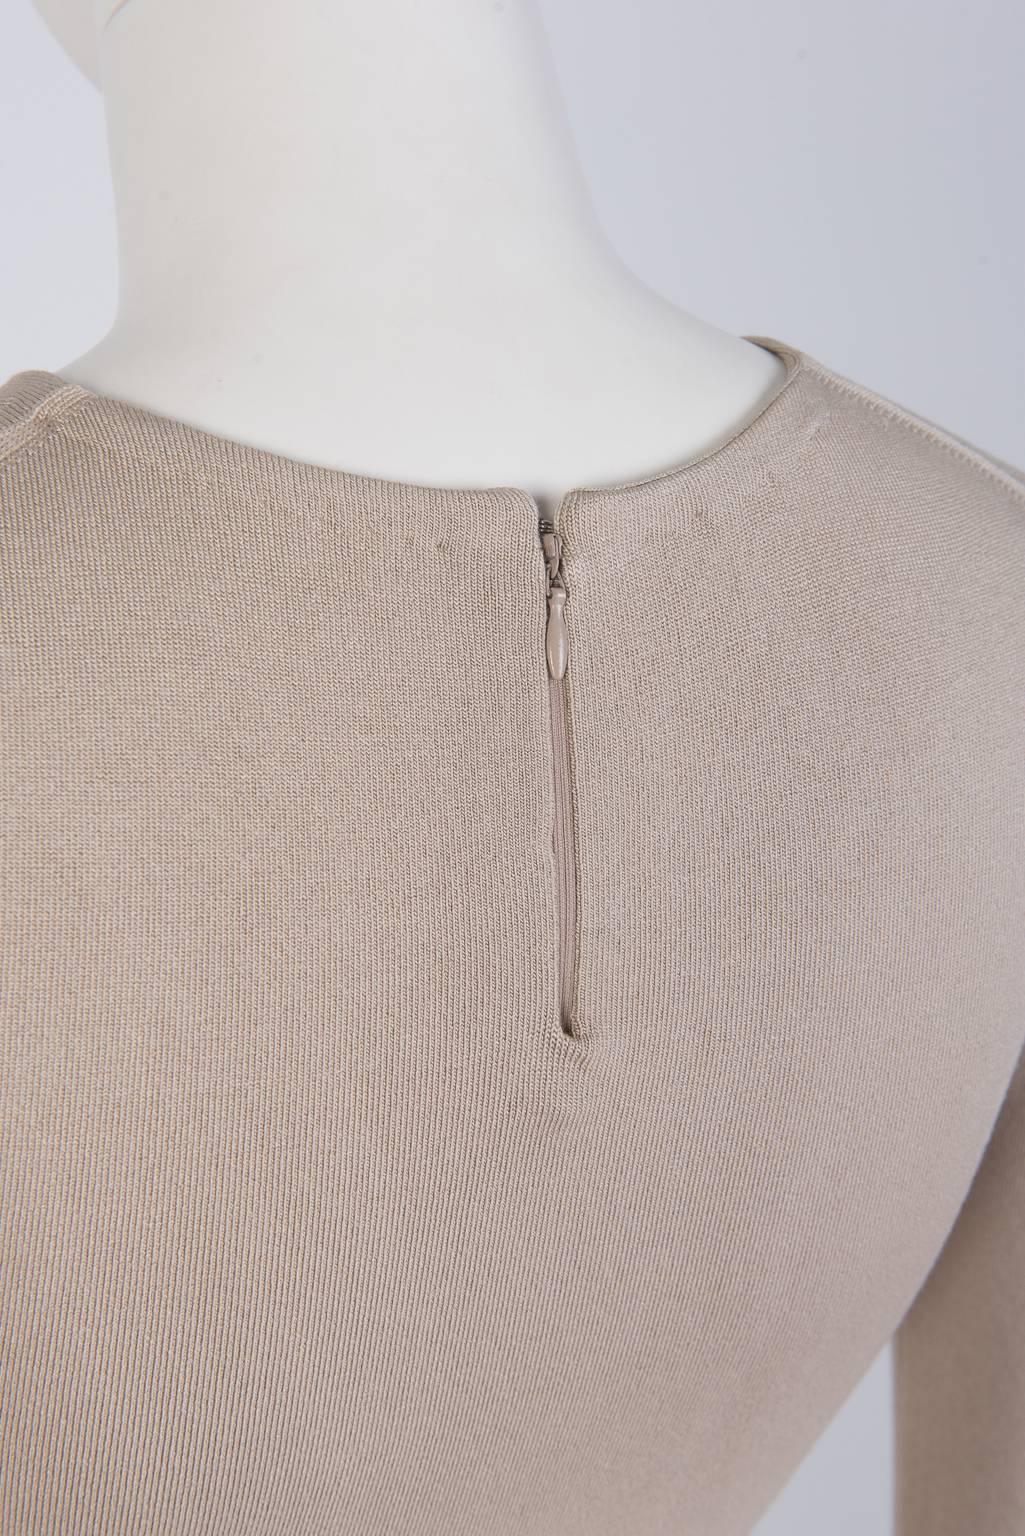 Women's Prada Silk Knit Top For Sale